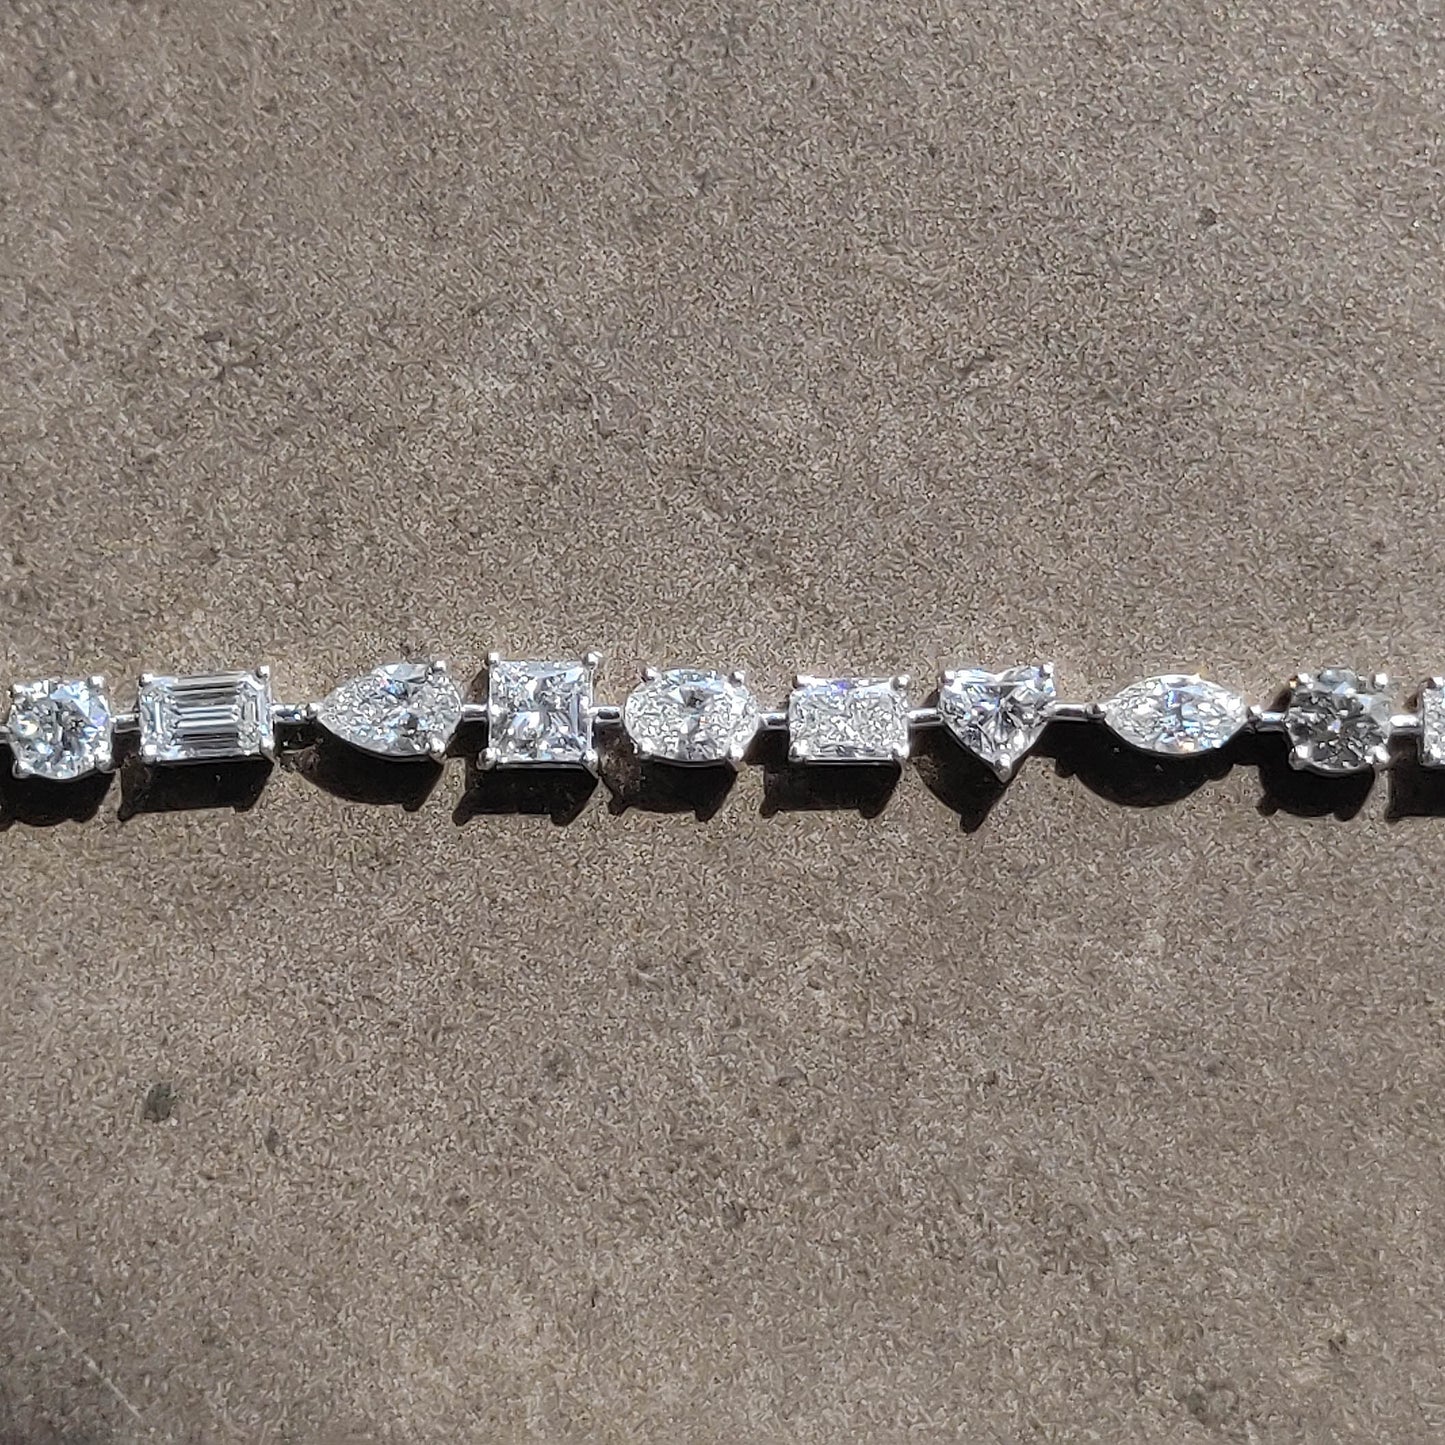 Multi-shape diamond tennis bracelet